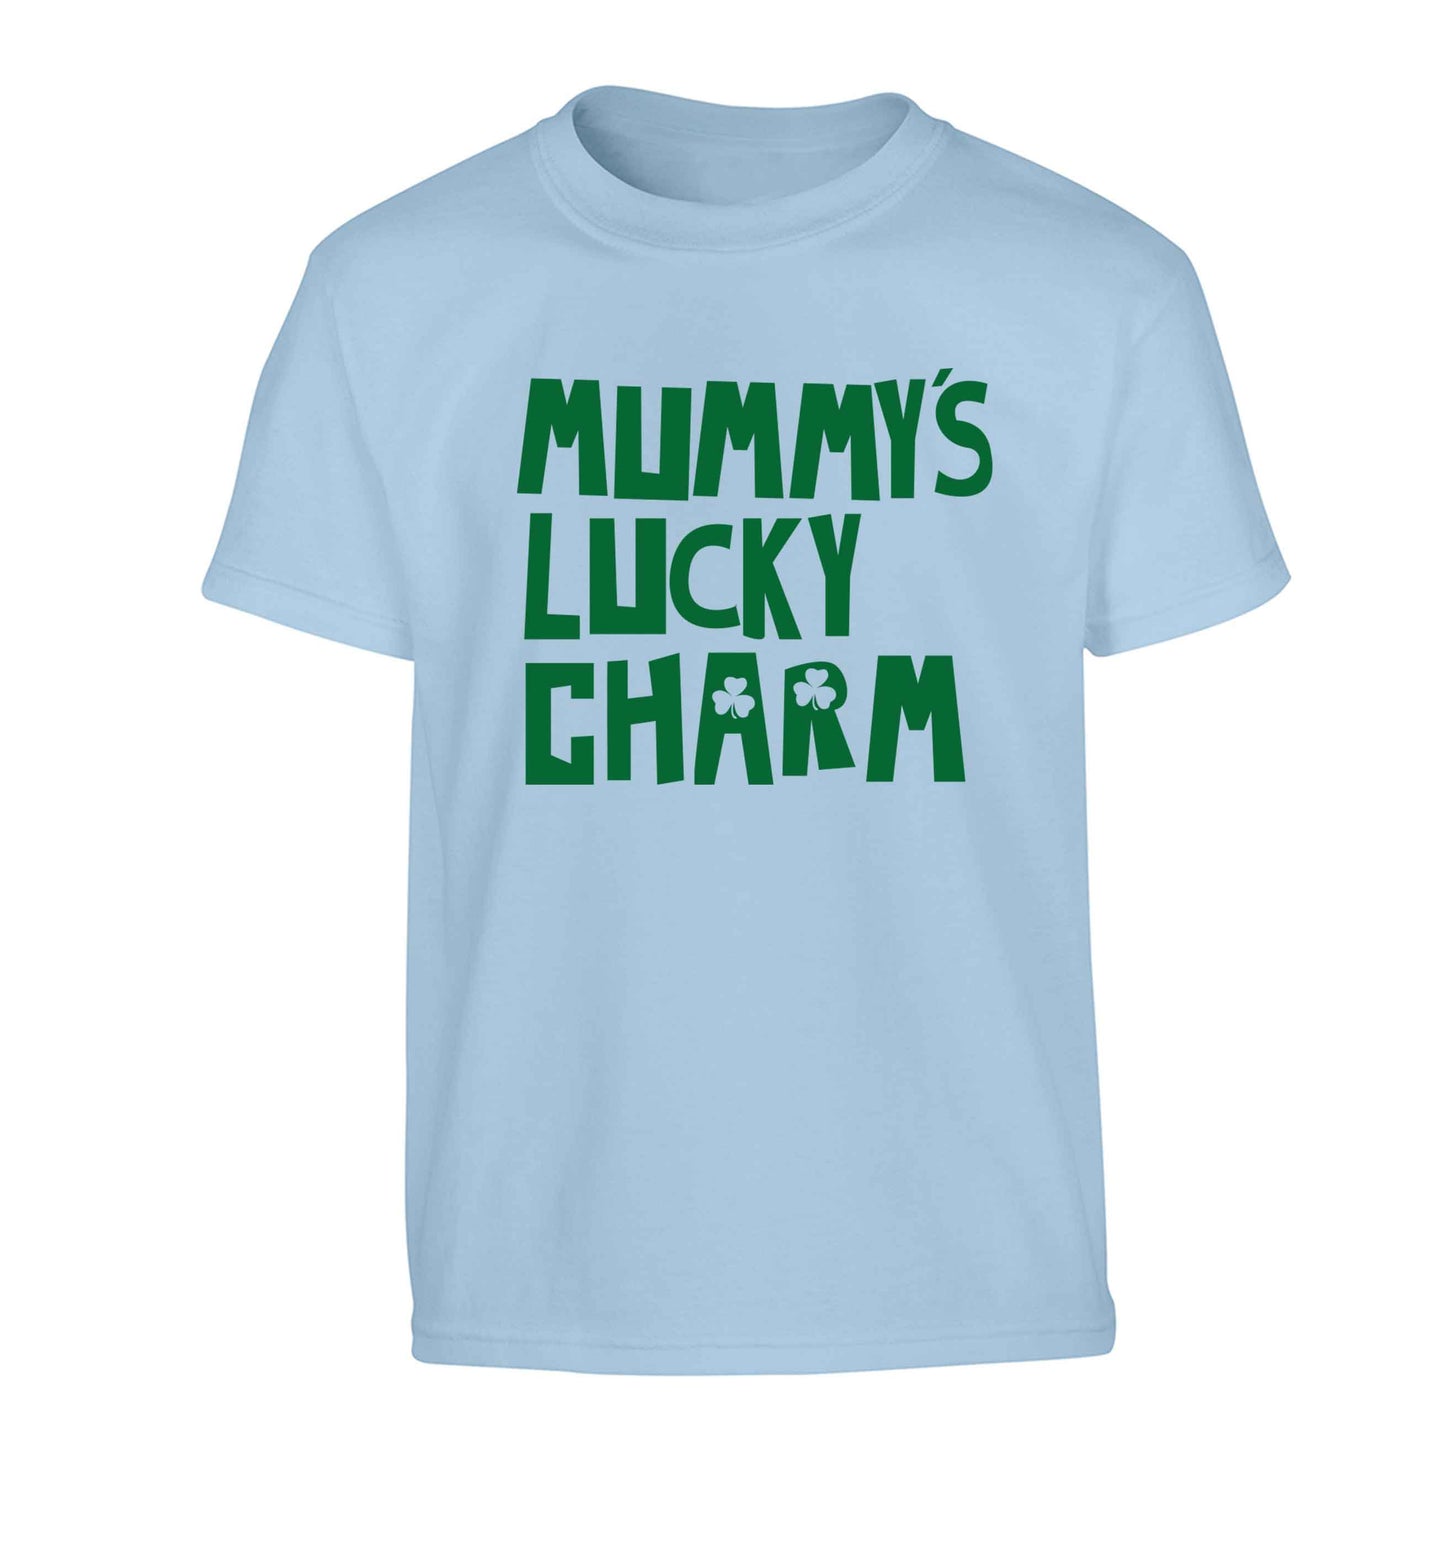 Mummy's lucky charm Children's light blue Tshirt 12-13 Years